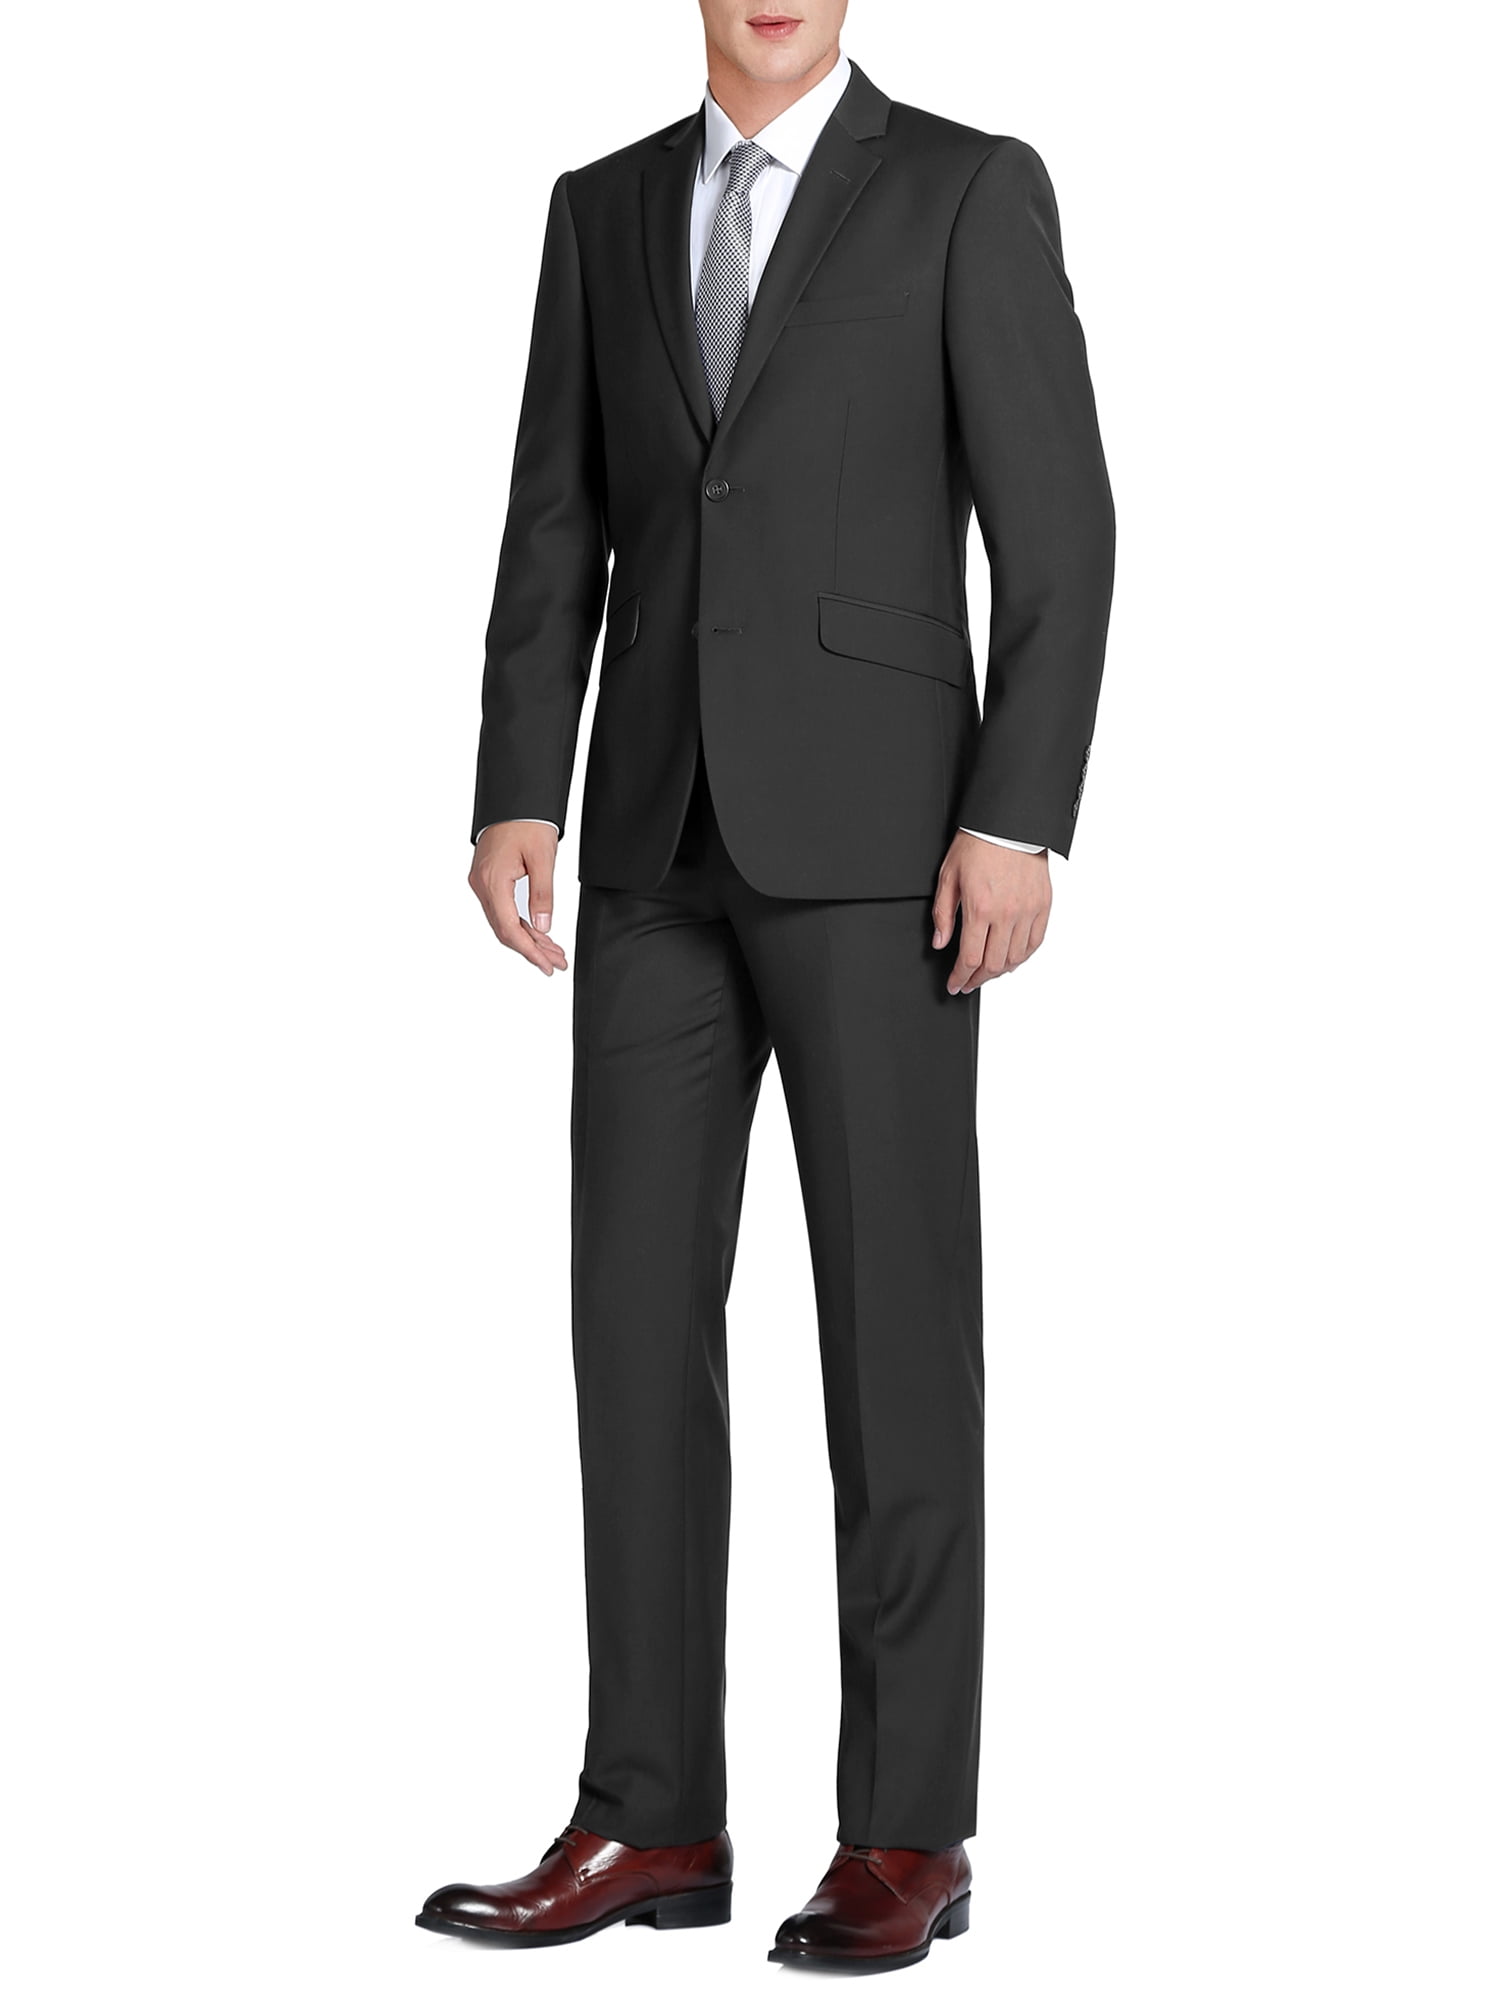 YND Men's Slim Fit 2 Piece Suit One Button Solid Jacket Pants Set with Tie